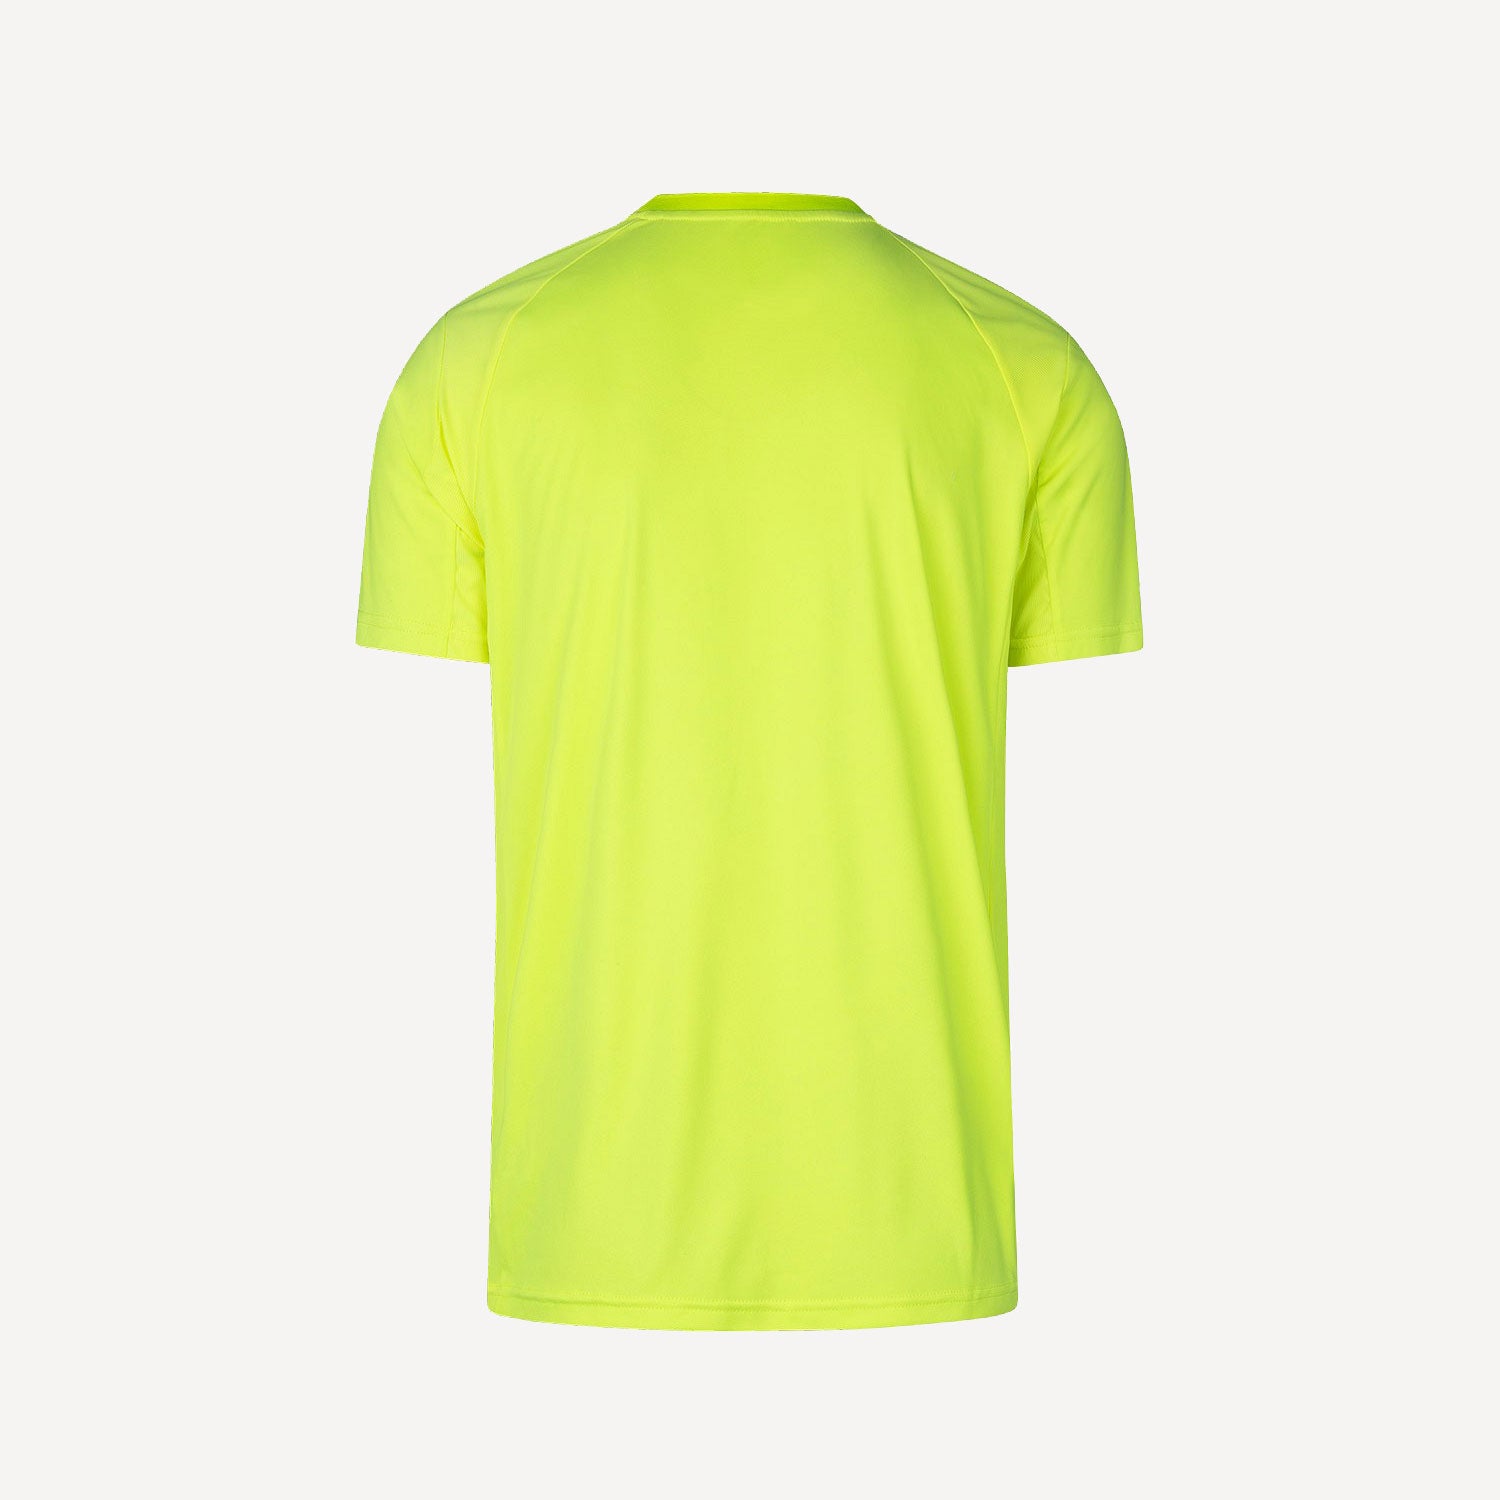 Robey Ace Men's Tennis Shirt - Yellow (2)